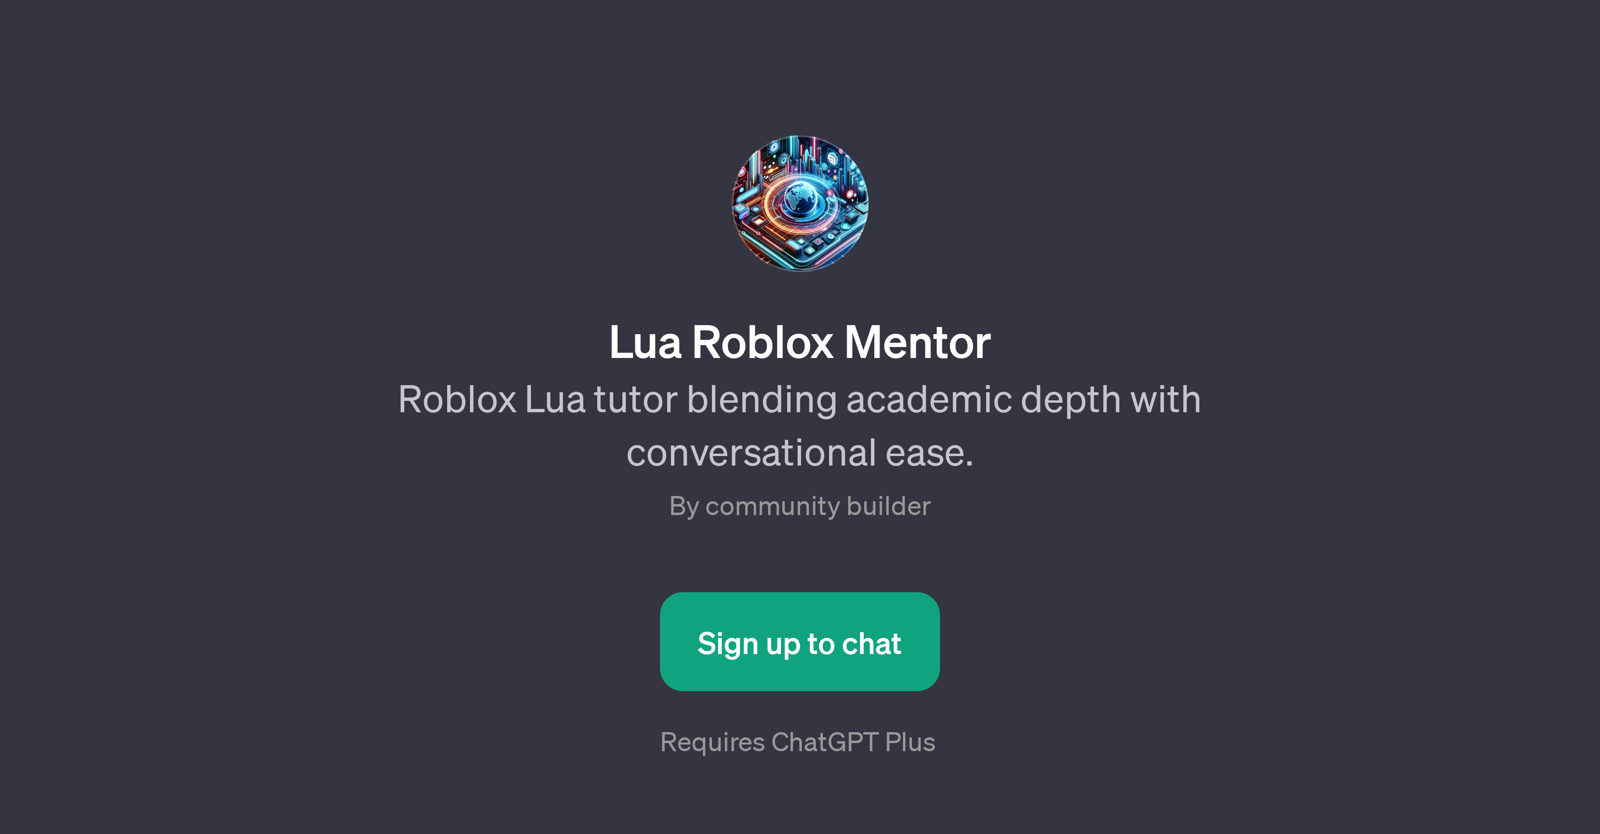 Lua Roblox Mentor website